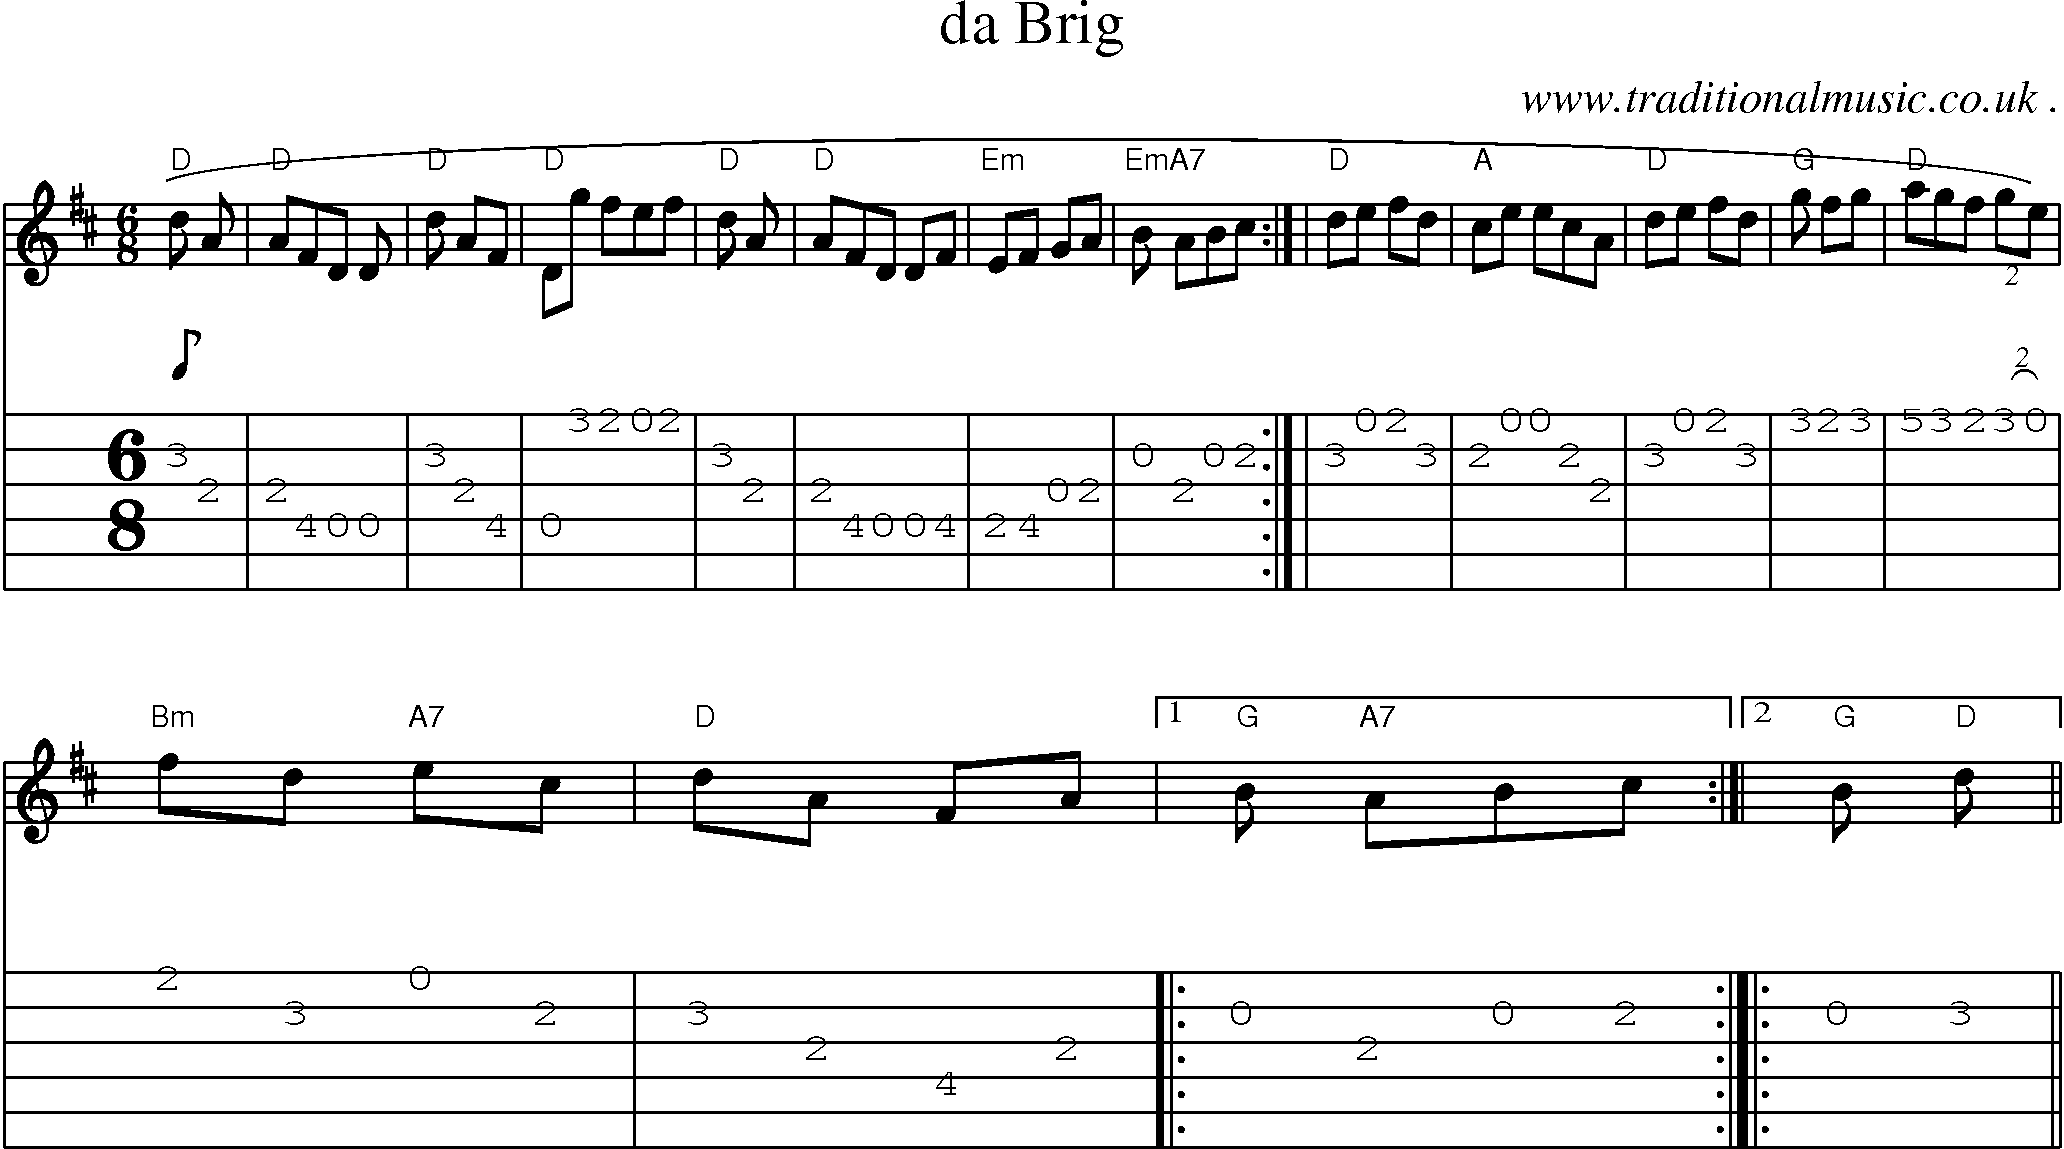 Sheet-music  score, Chords and Guitar Tabs for Da Brig